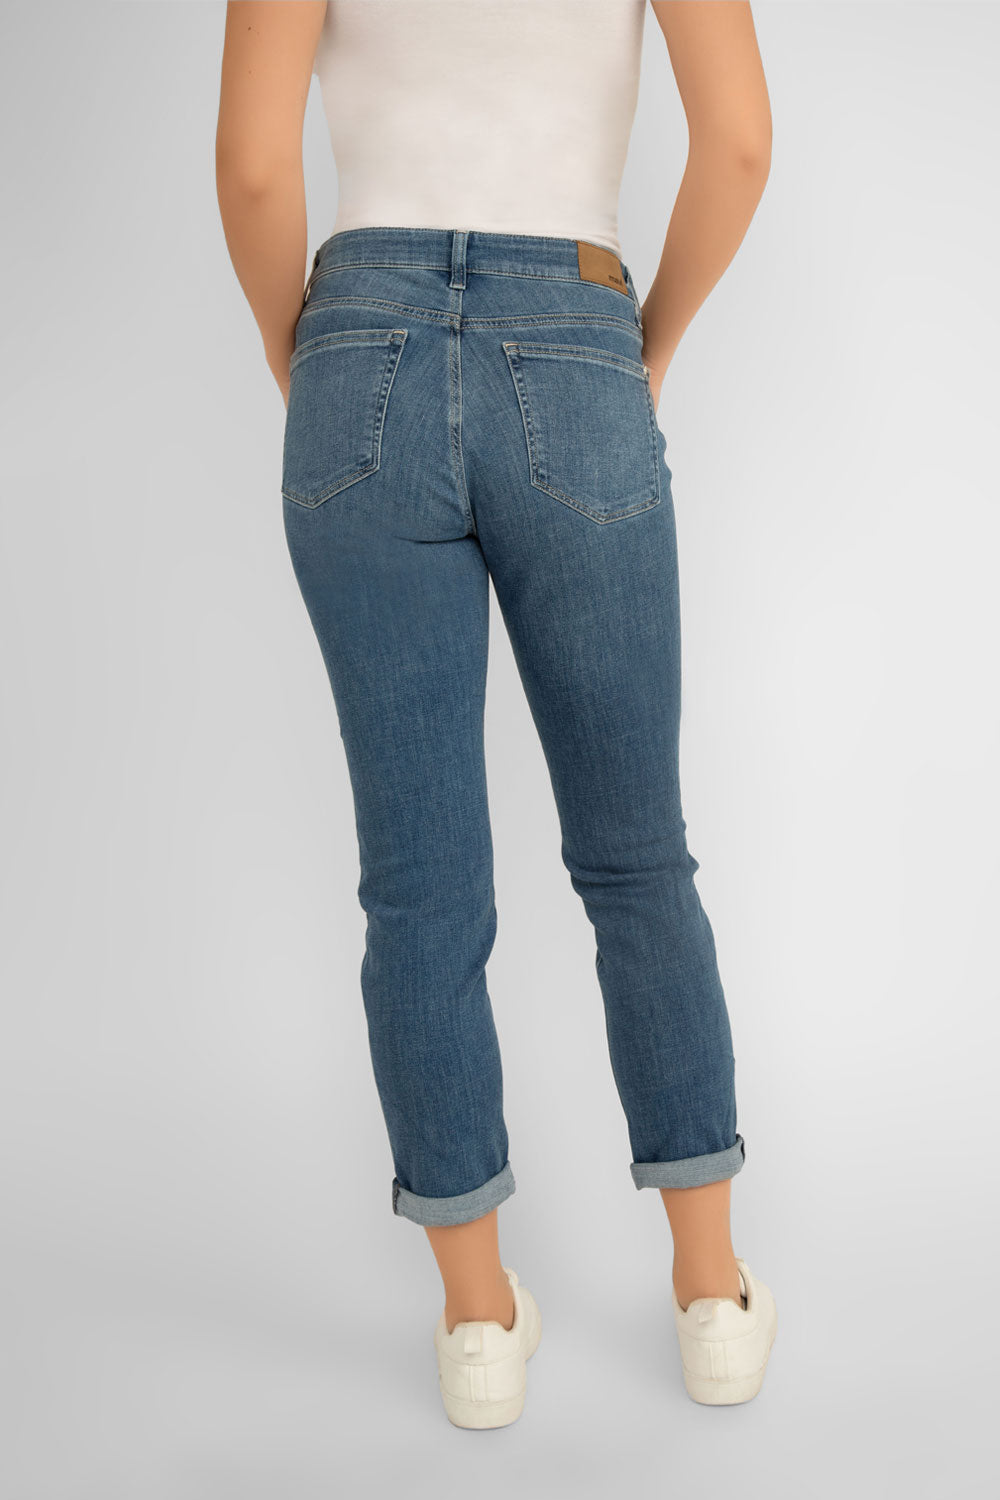 Mavi Jeans - Women's Denim - Kathleen Brushed Slim Boyfriend Jeans in Blue wash